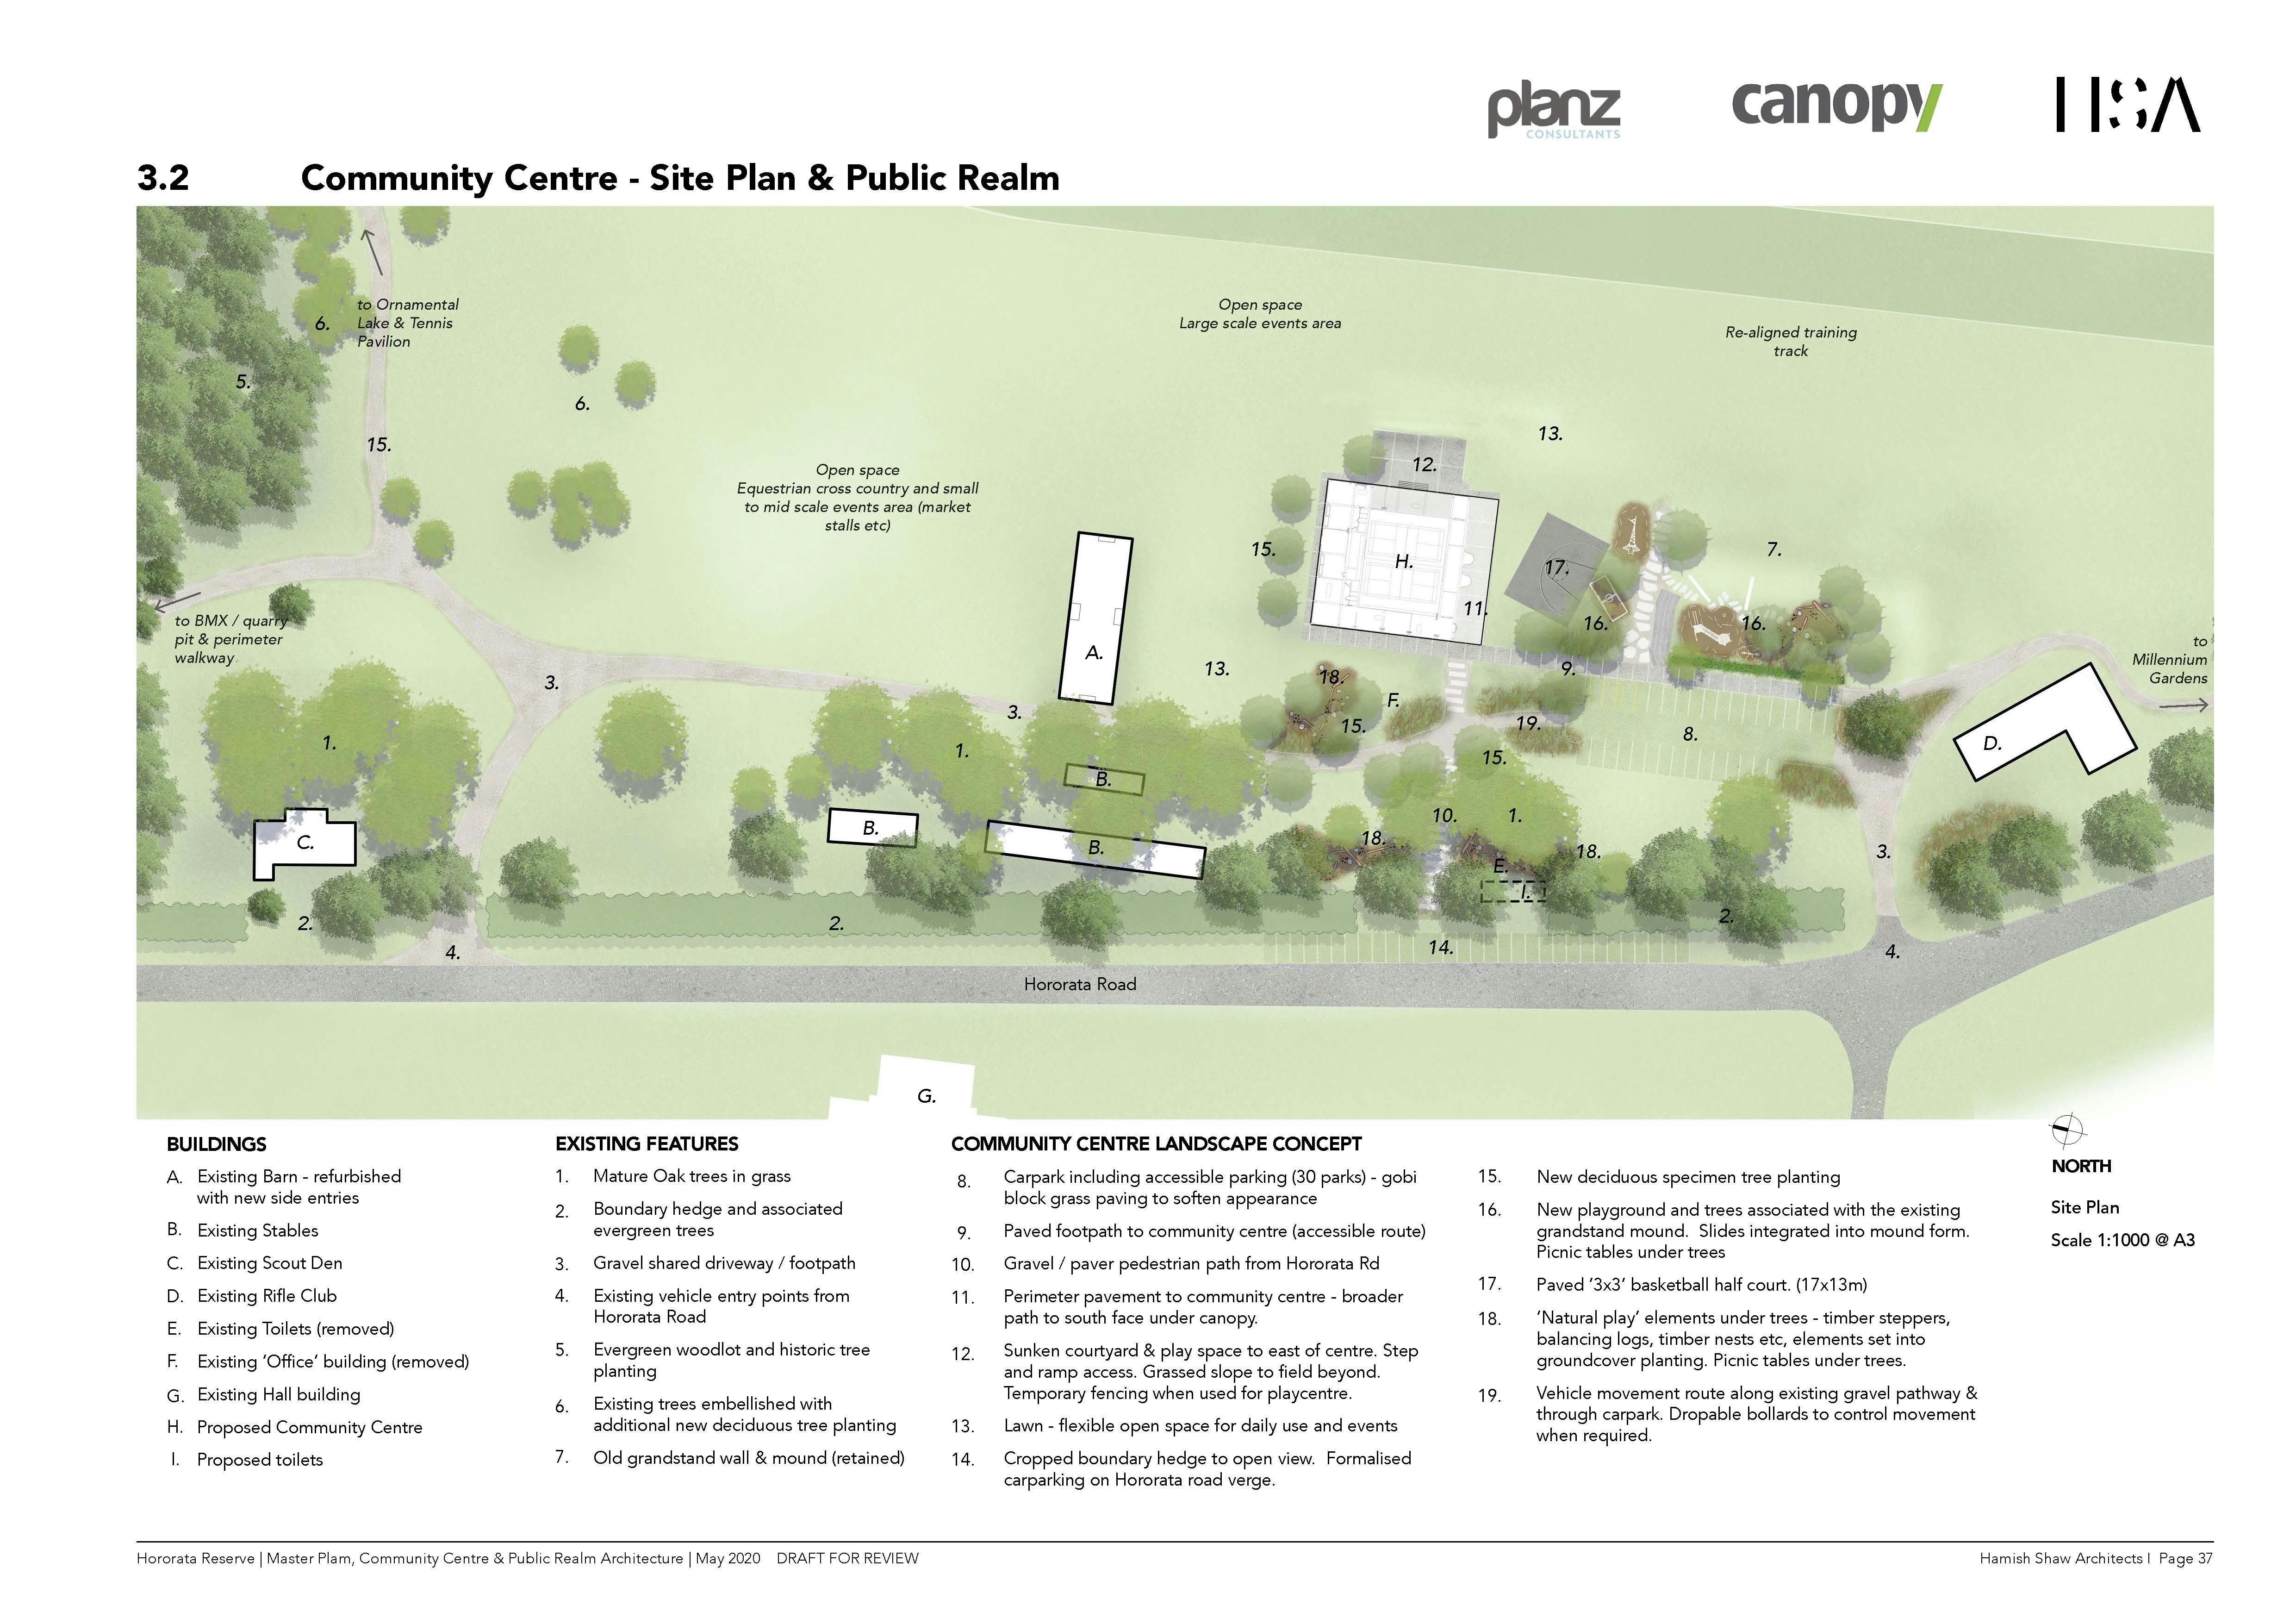 Community Centre - Site plan and public realm